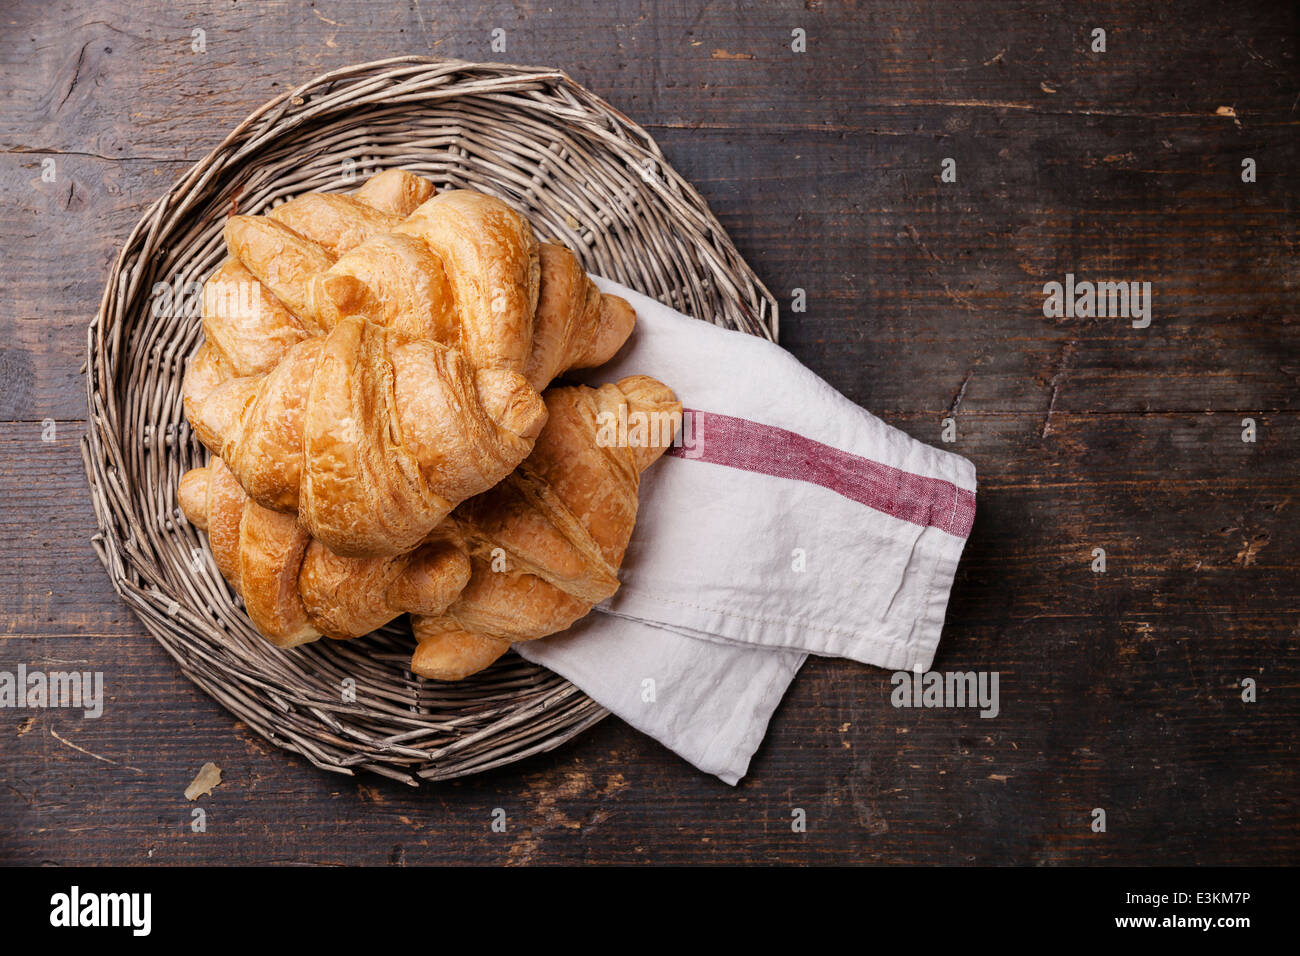 Croissants in wicker tray on dark wooden background Stock Photo